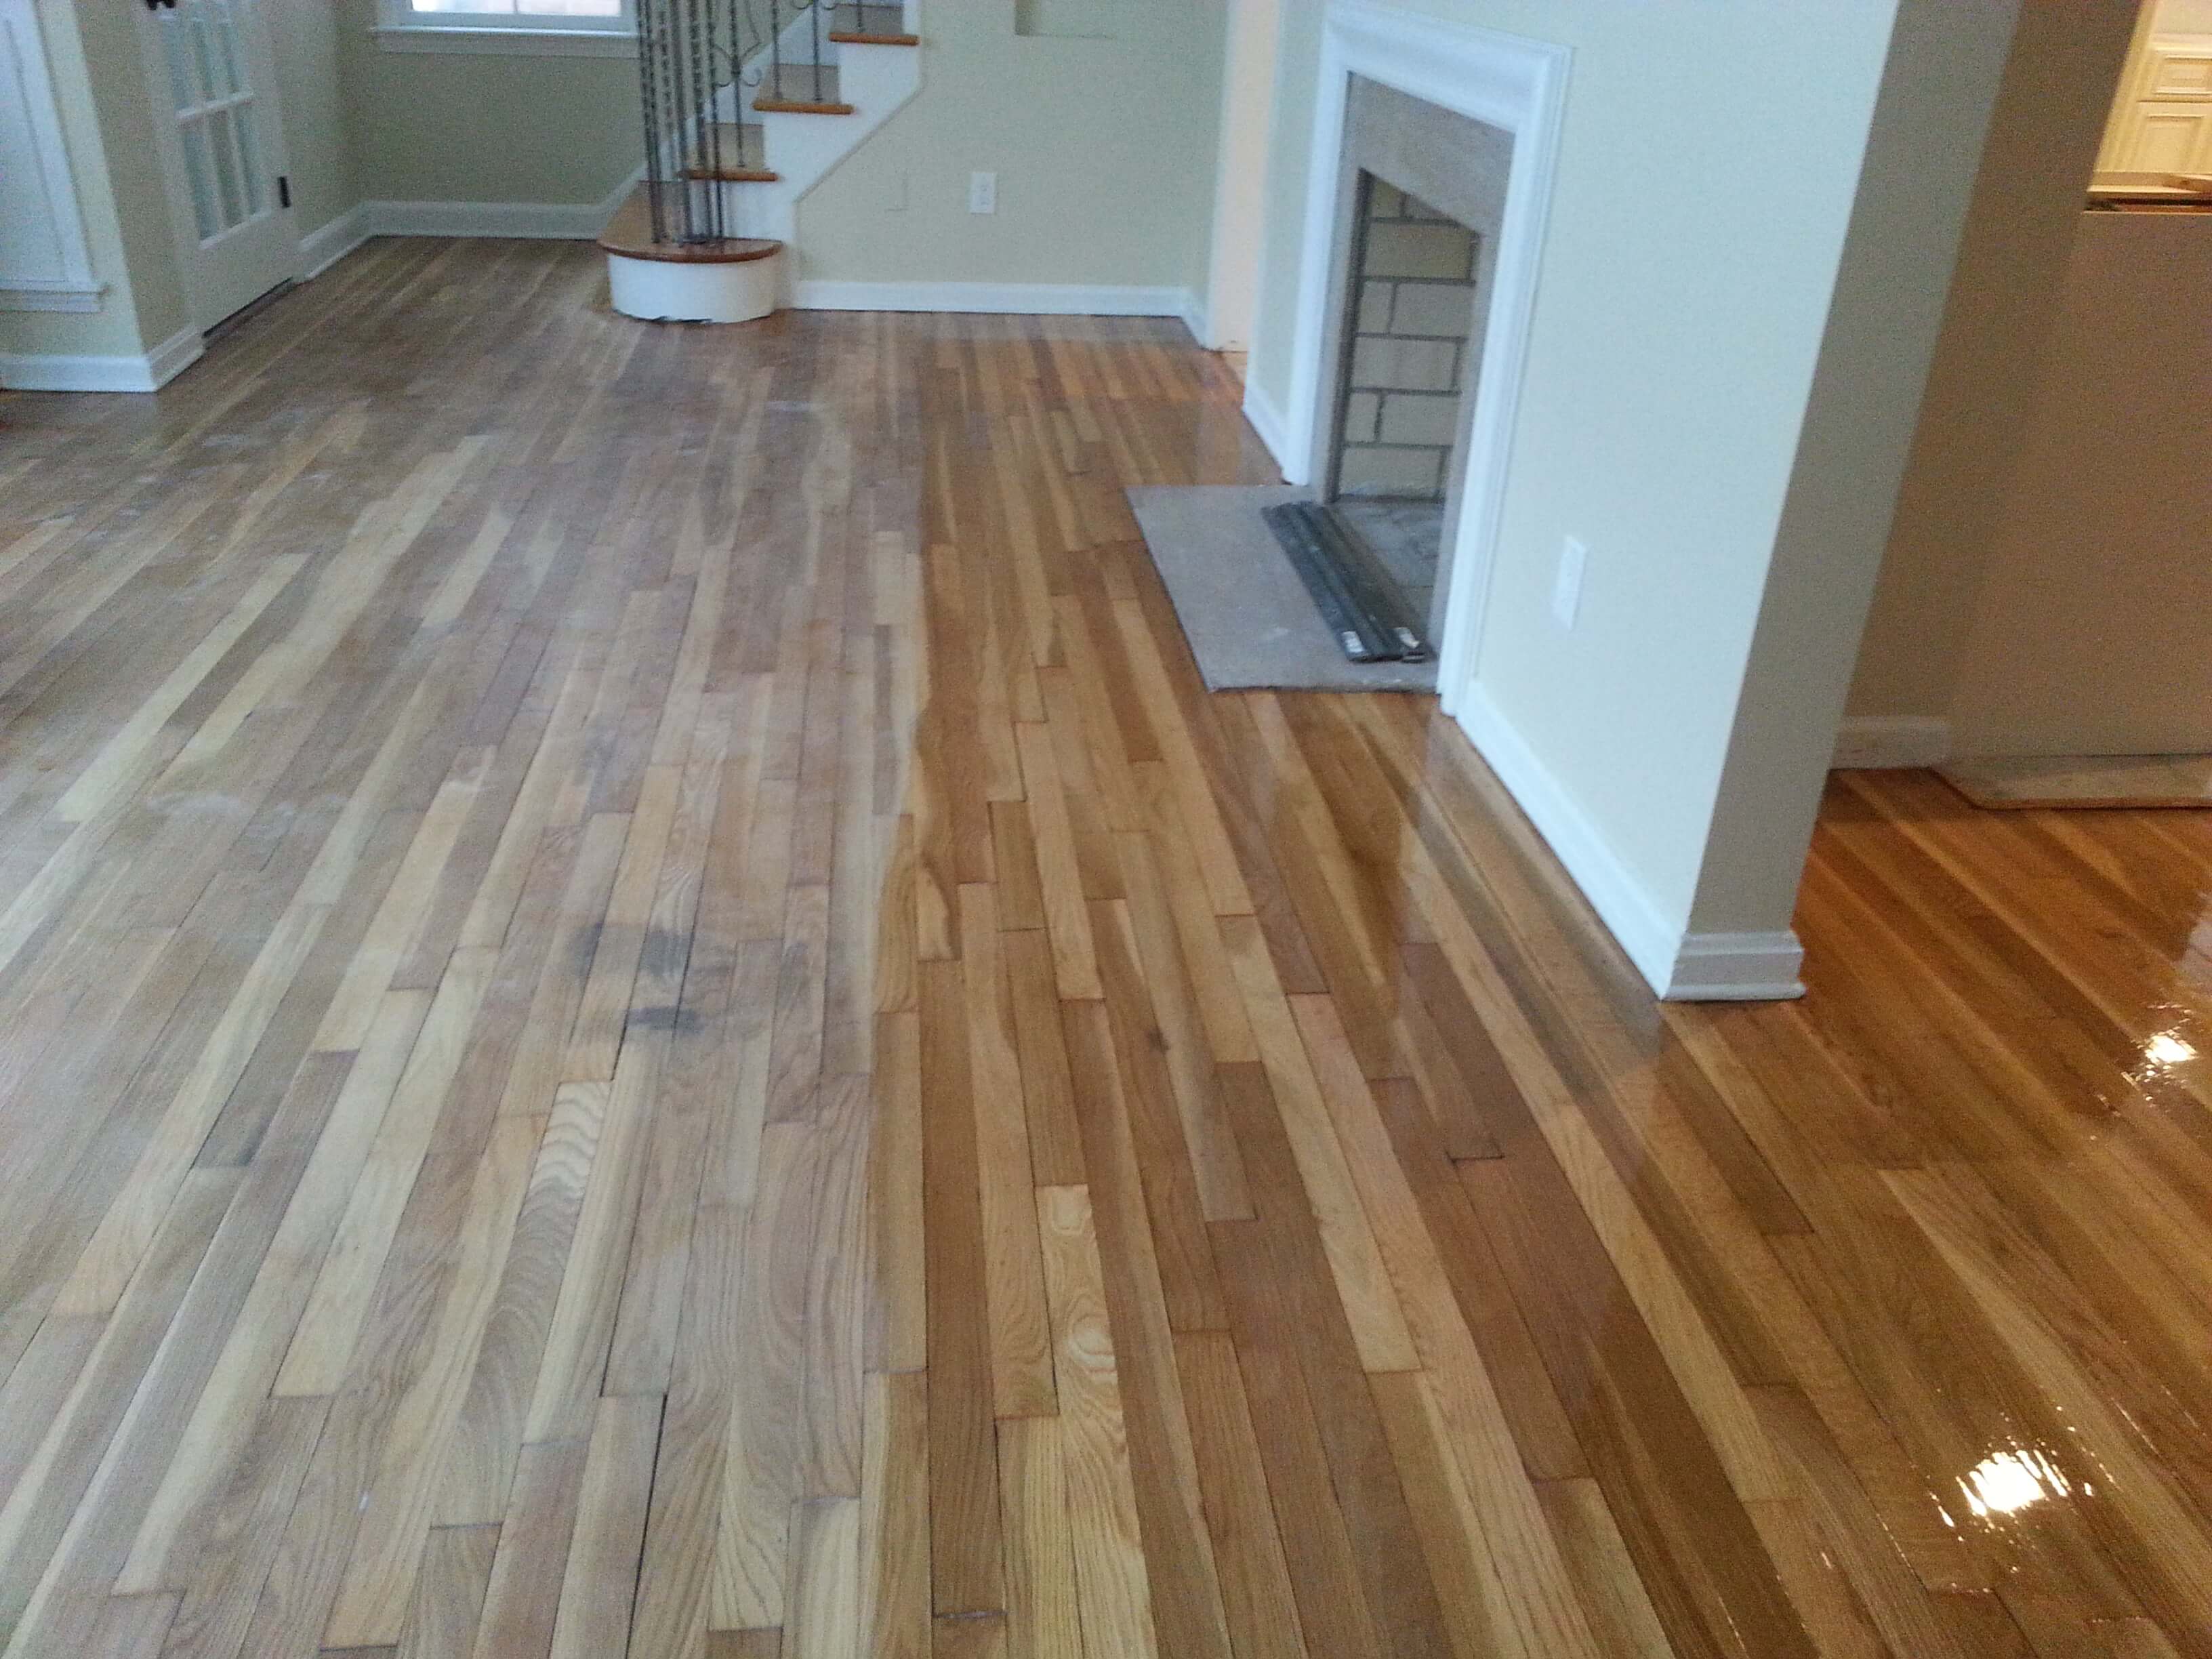 our hardwood floor resurfacing process in action.